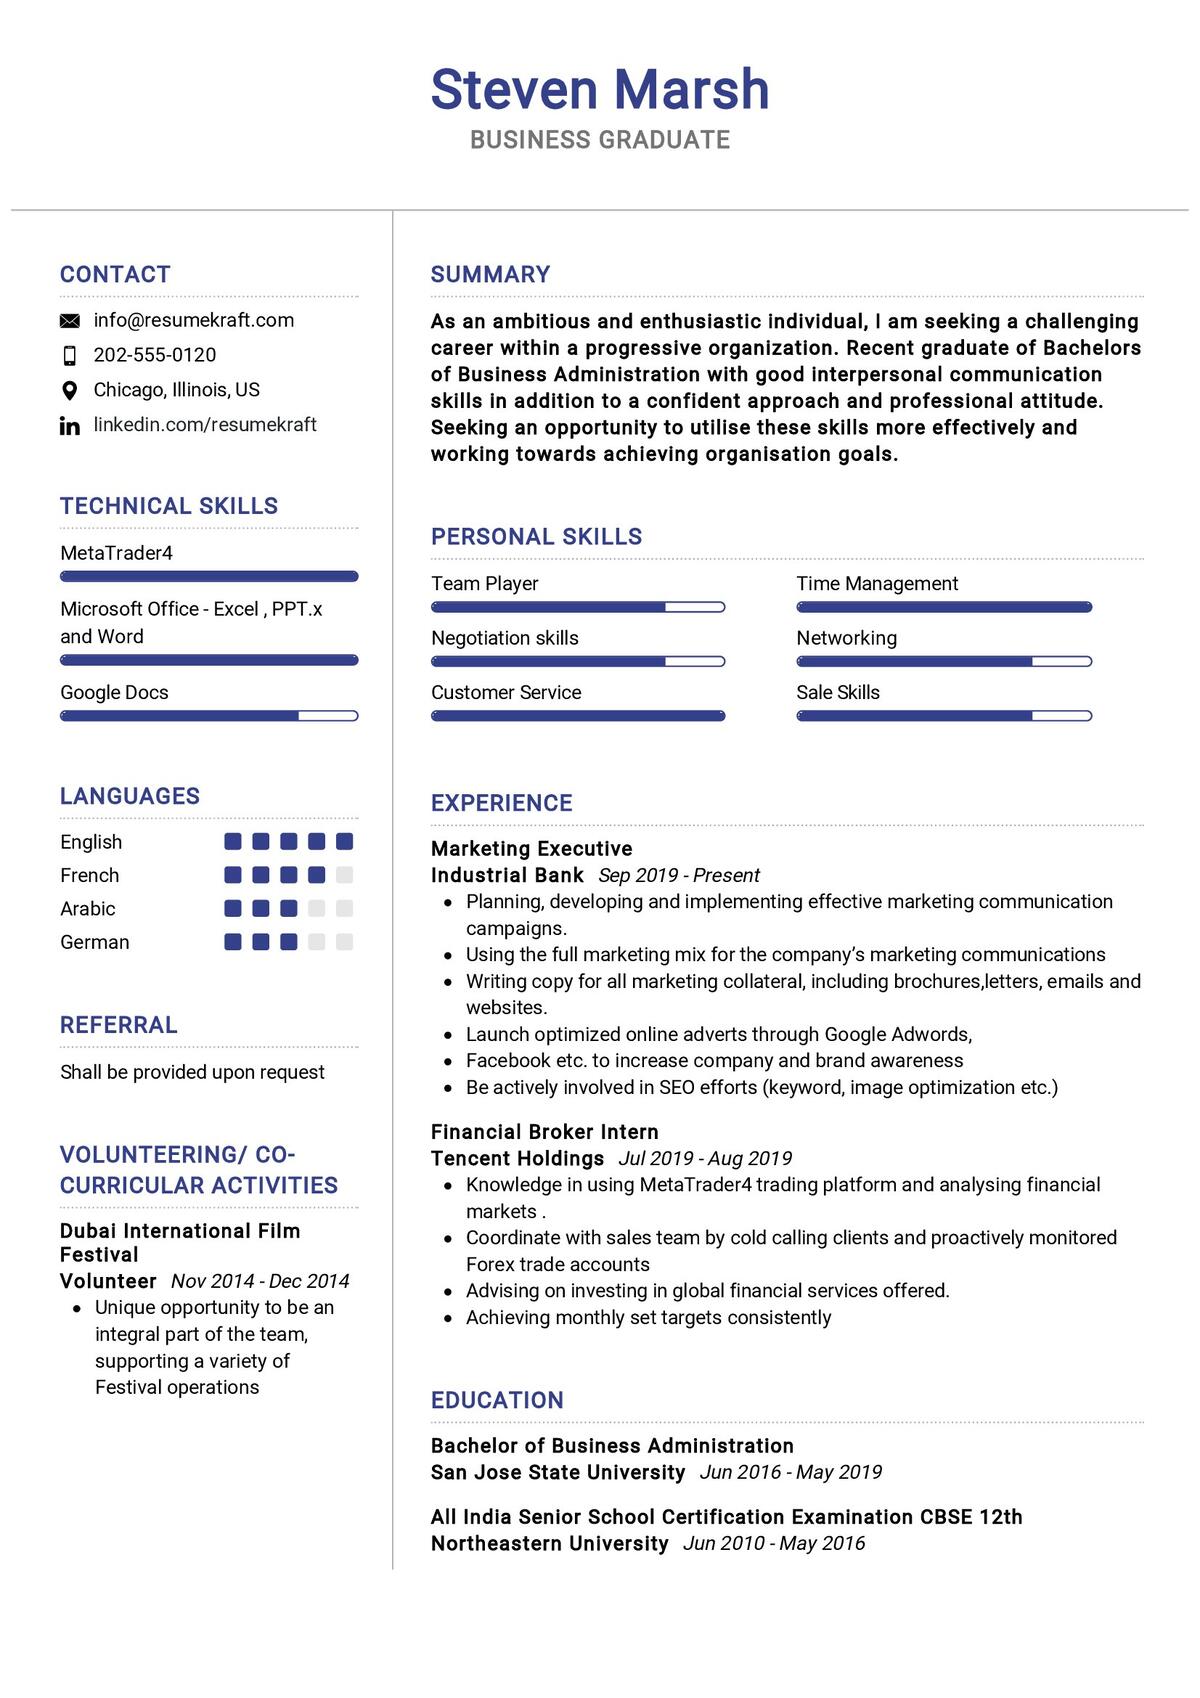 Business Graduate Resume